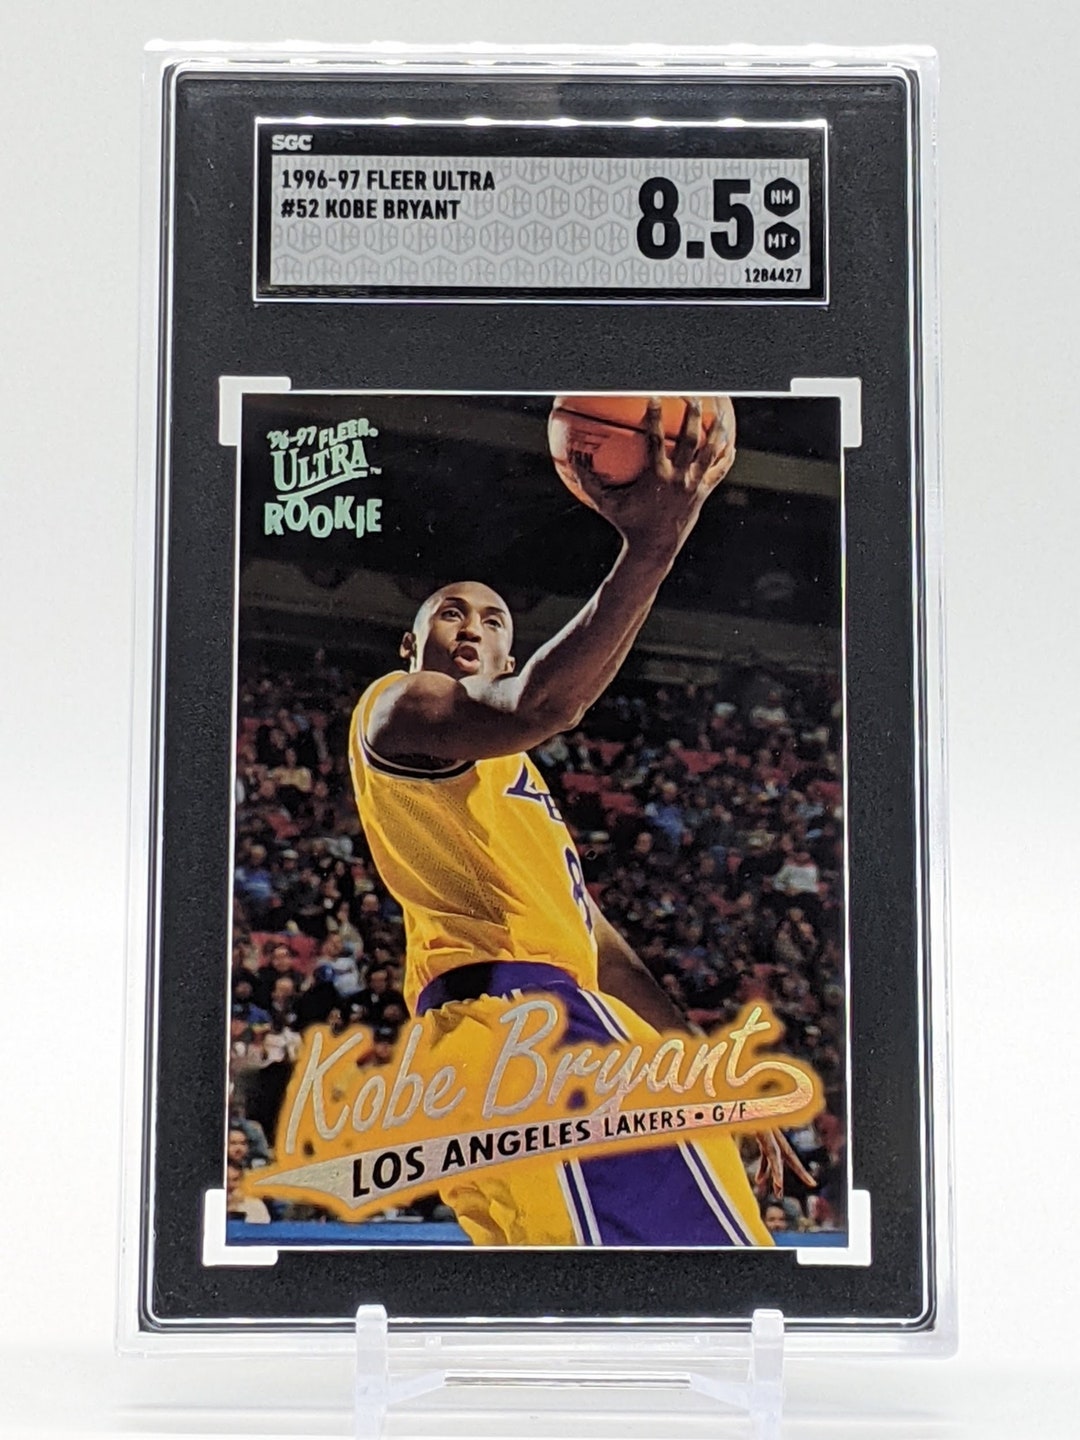 Kobe Bryant Rookie Card 1996-1997 Fleer Ultra 52 SGC 8.5 Near Mint